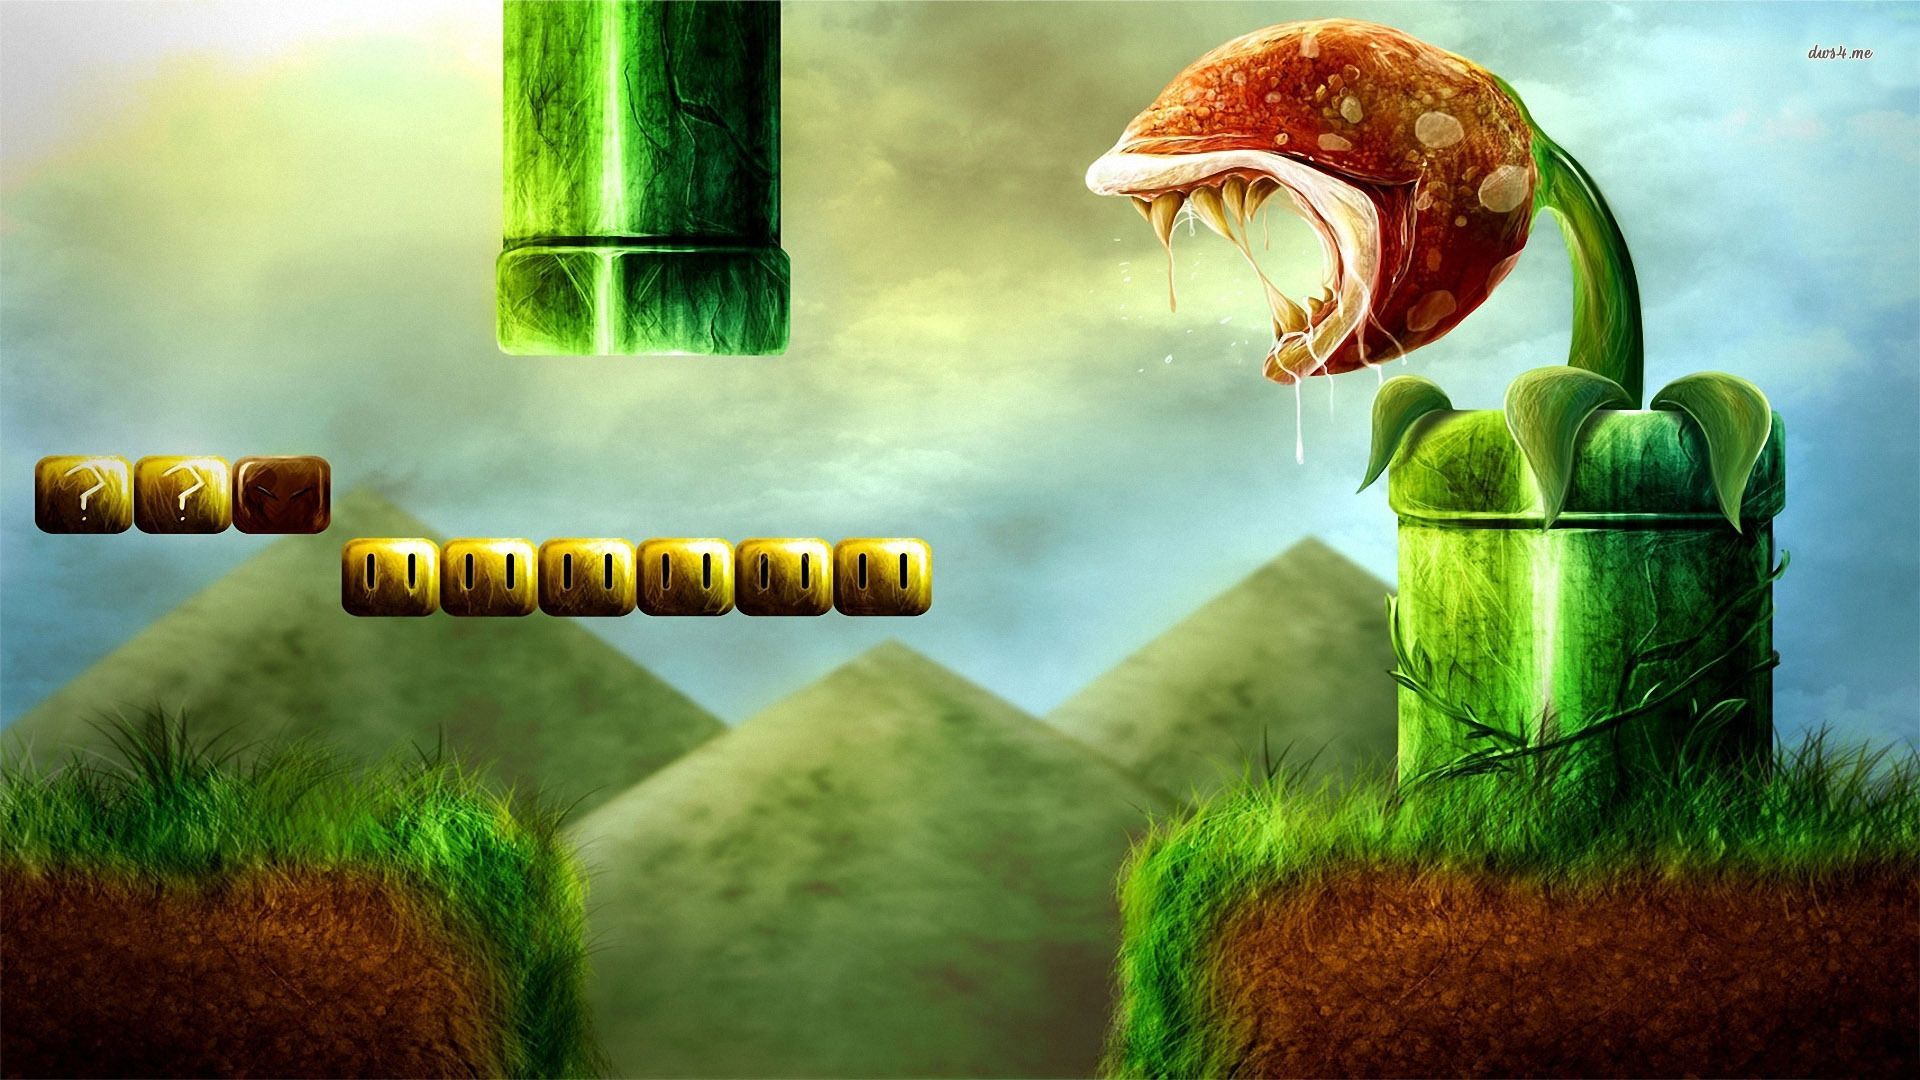 Super Mario - Piranha Plant wallpaper - Game wallpapers - #6562